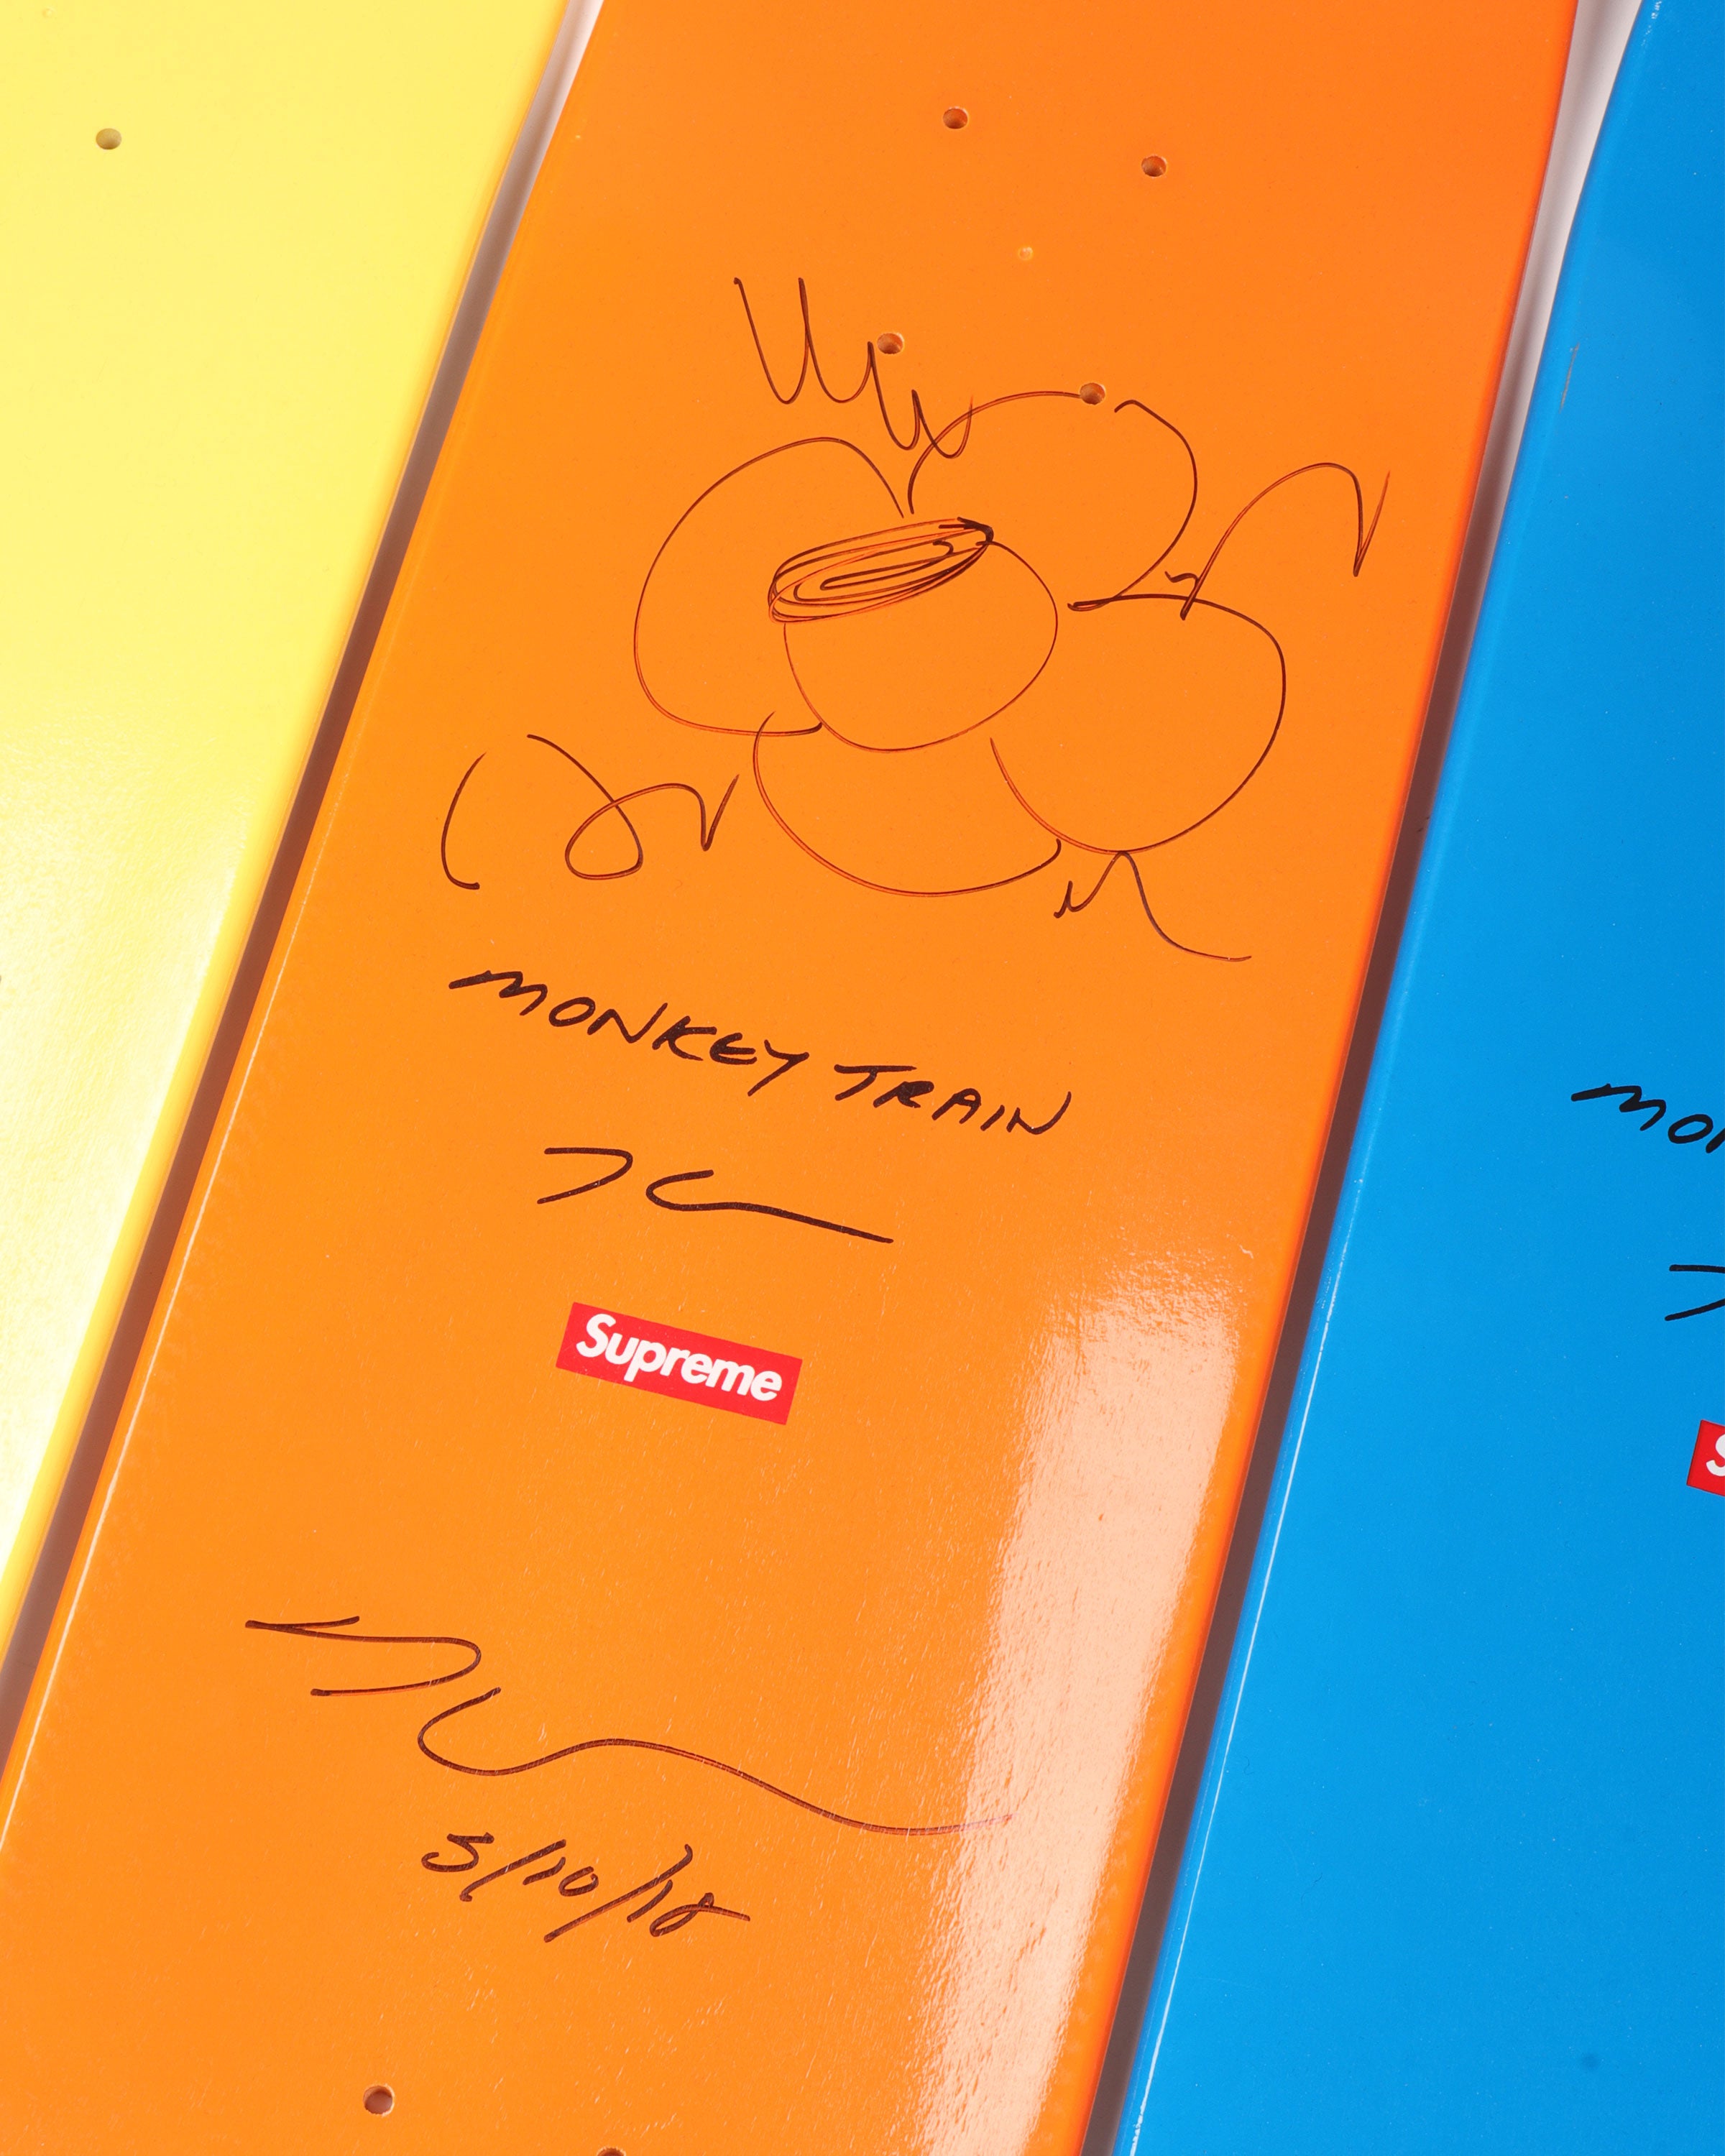 Jeff Koons Signed Set of Three Skateboard Decks